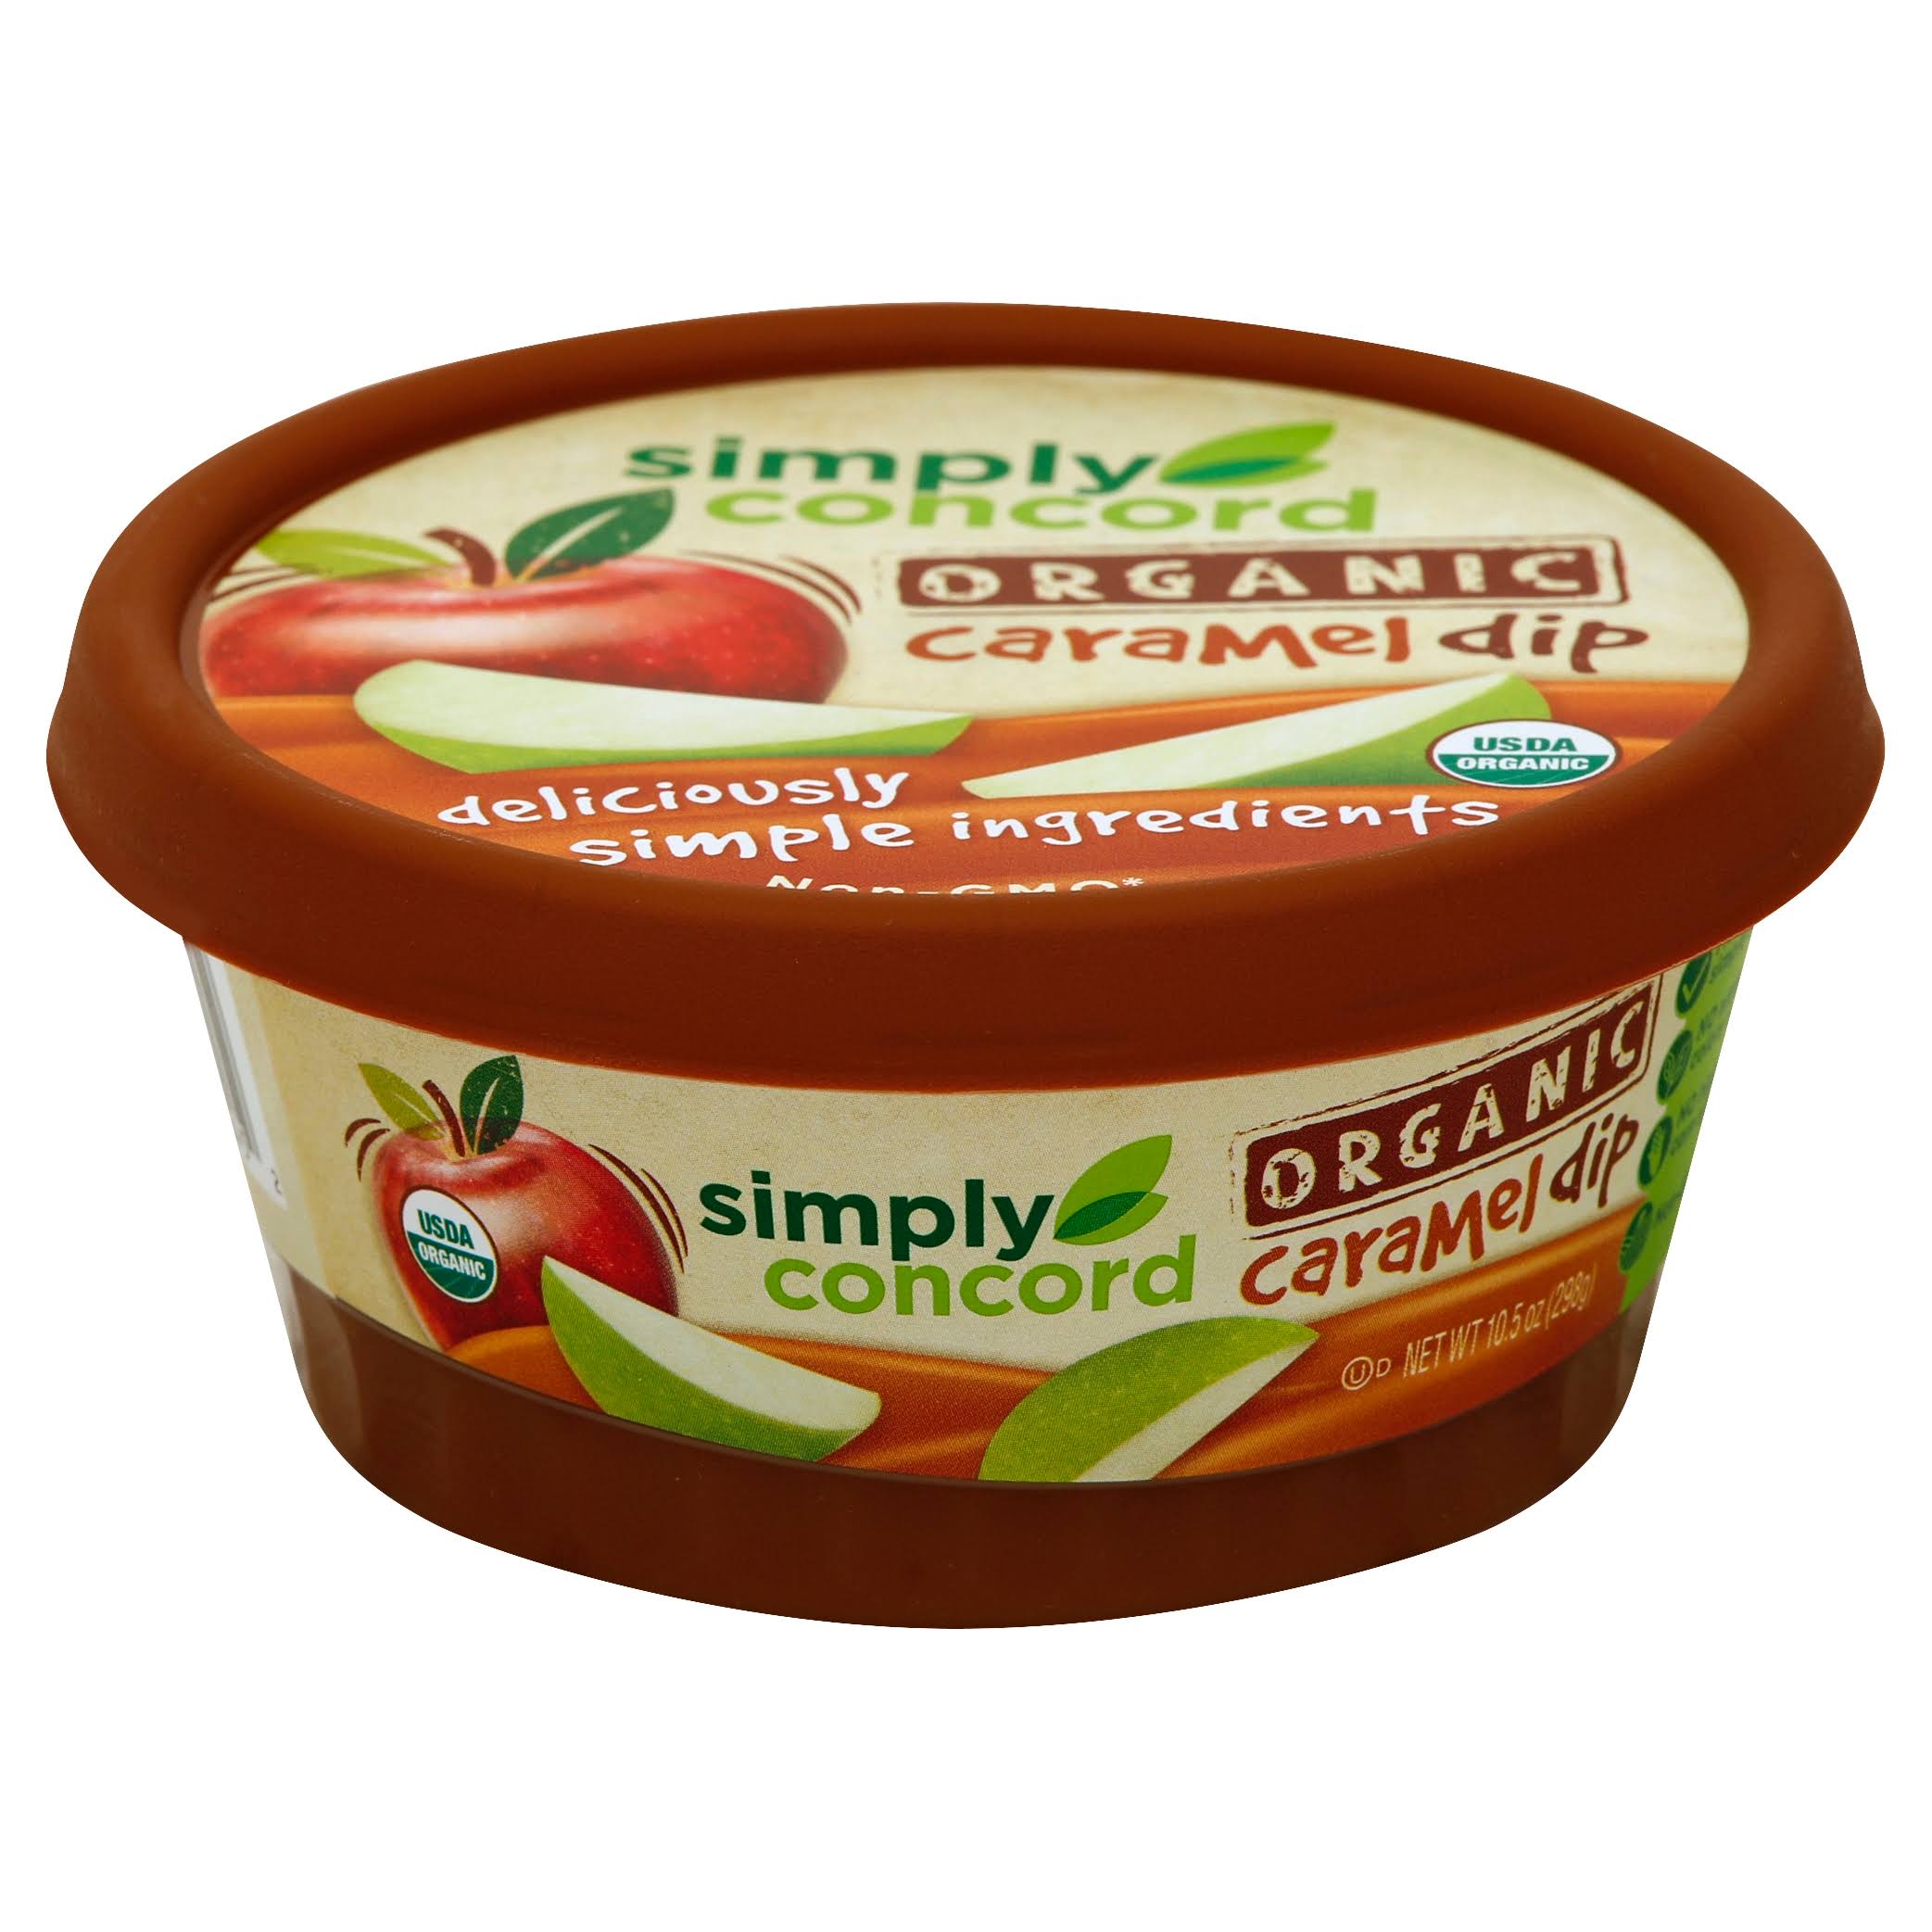 Simply Concord Caramel Dip, Organic - 10.5 oz